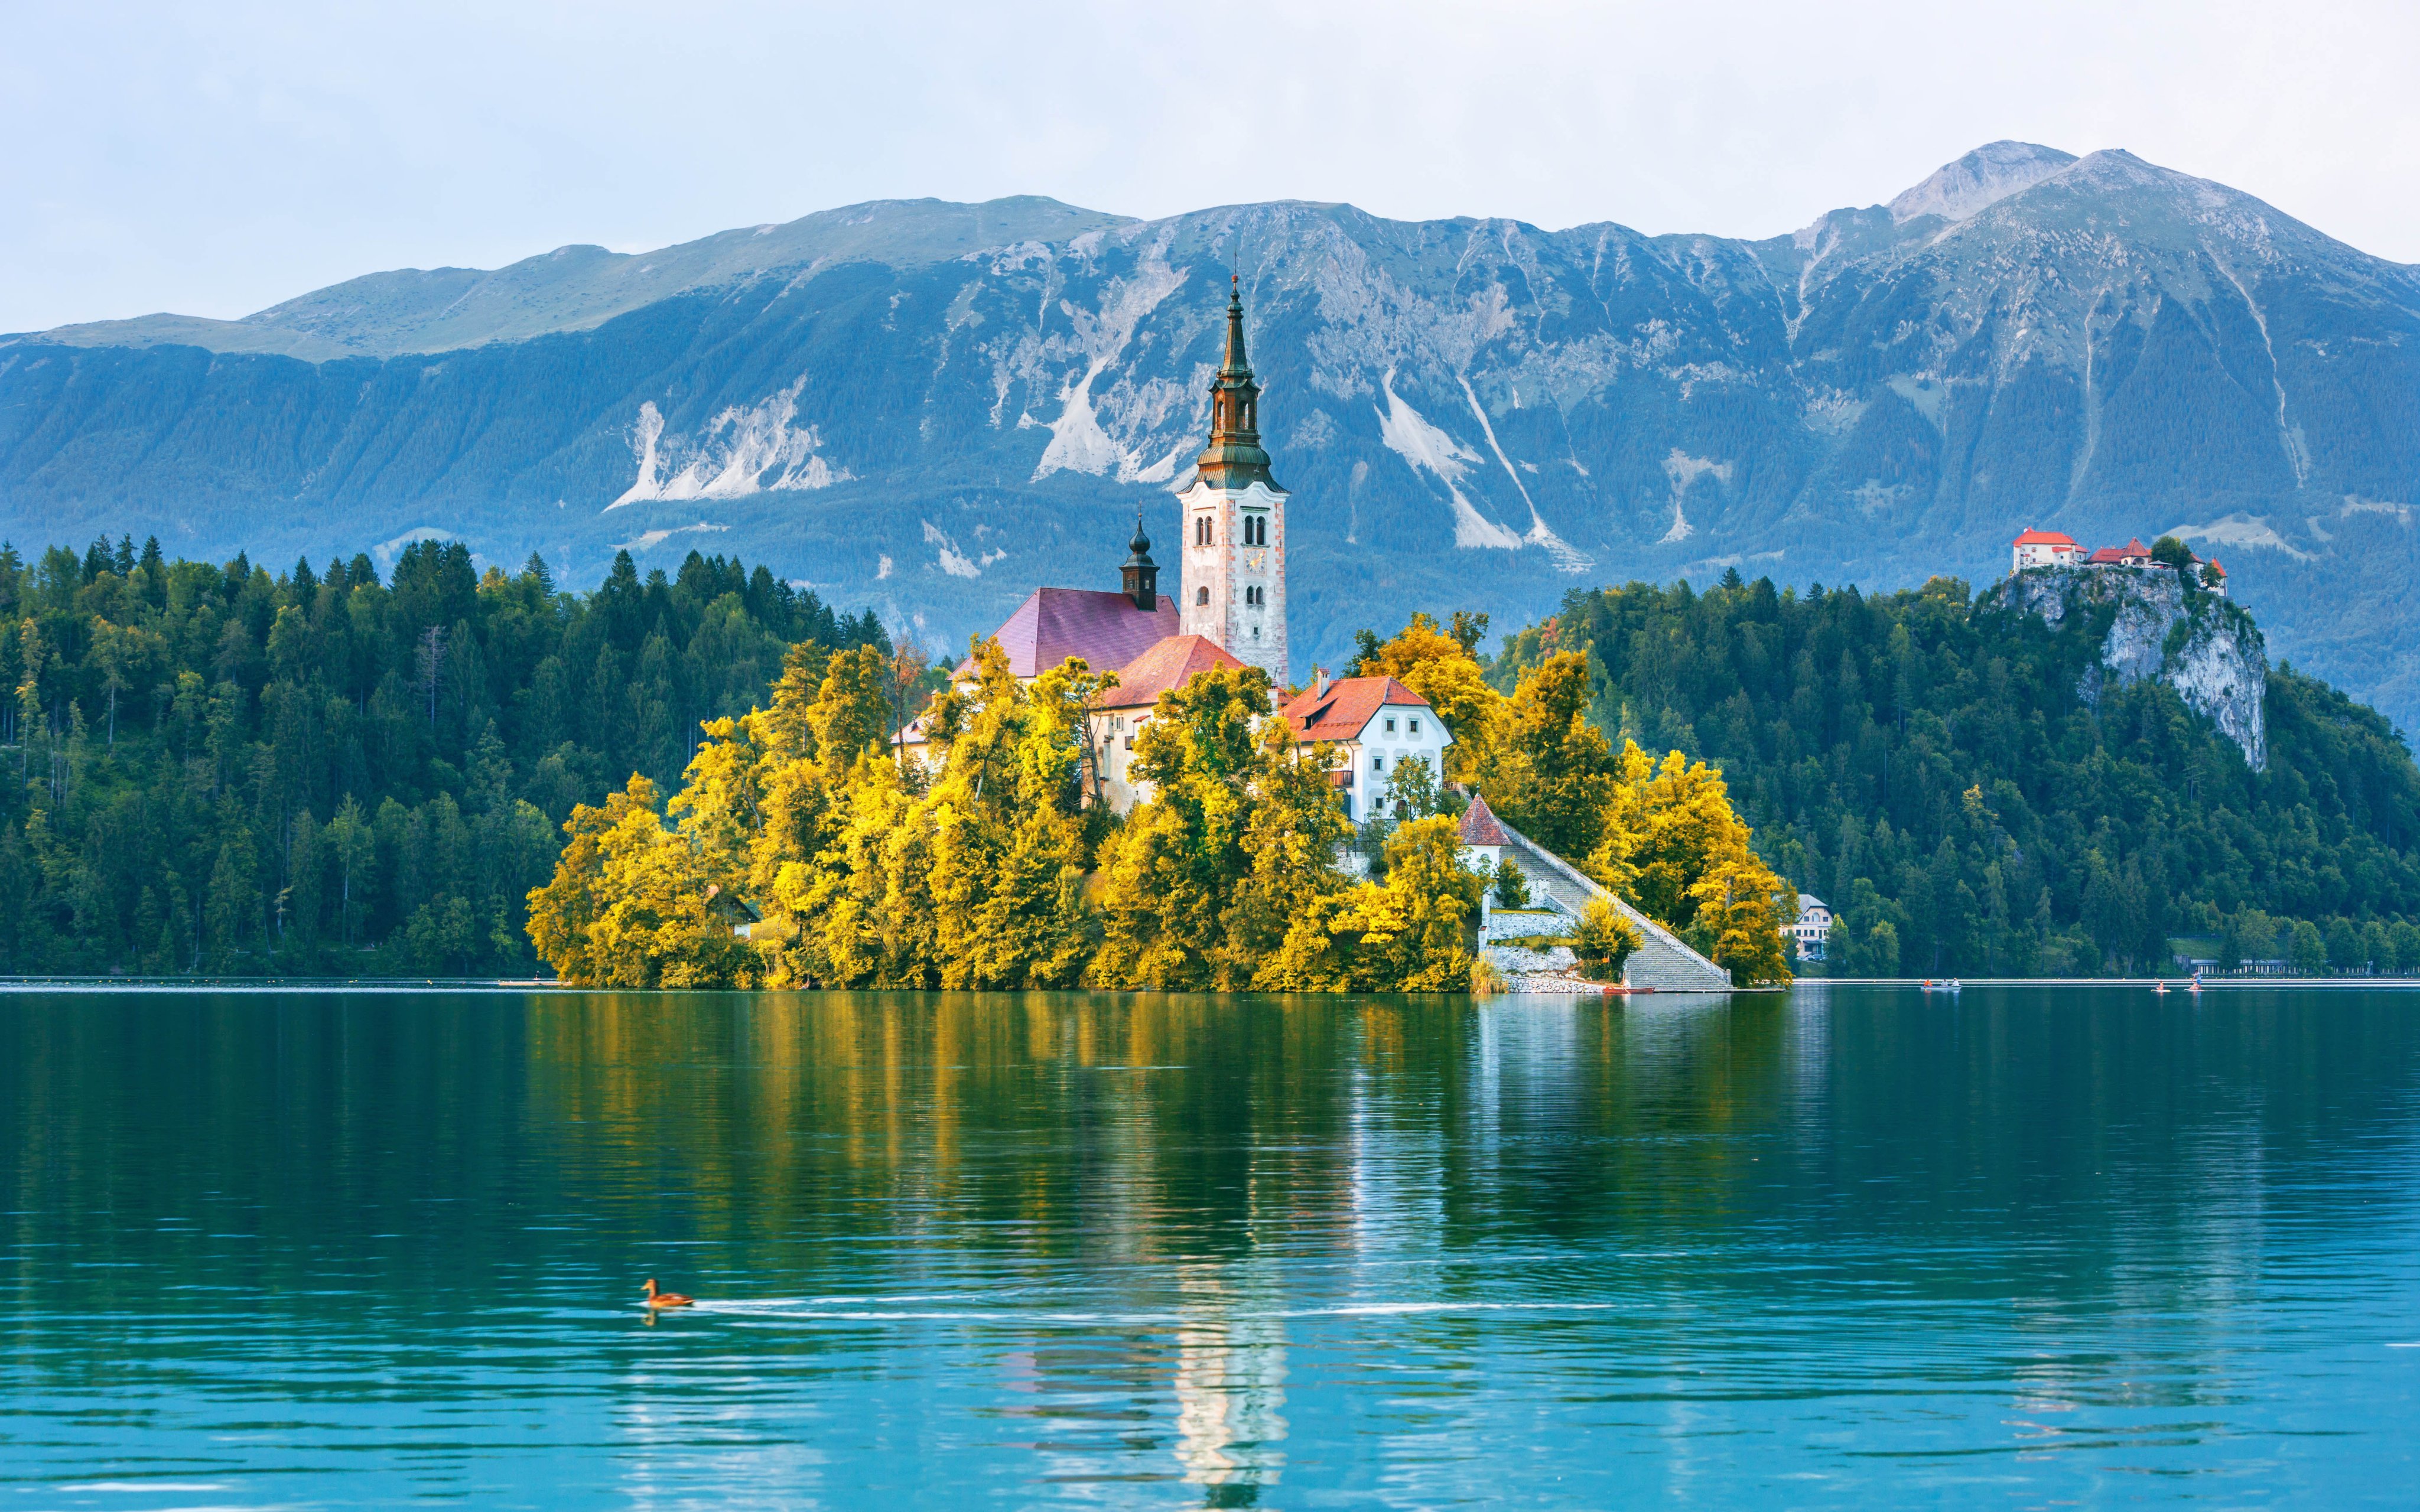 Slovinsko len 400 m od jazera Bled: Hotel Astoria Bled *** s raňajkami a luxusným wellness so saunovým svetom<br/>Hotel Astoria Bled ***, Prešernova 44, Bled 4260, astoria@vgs-bled.si